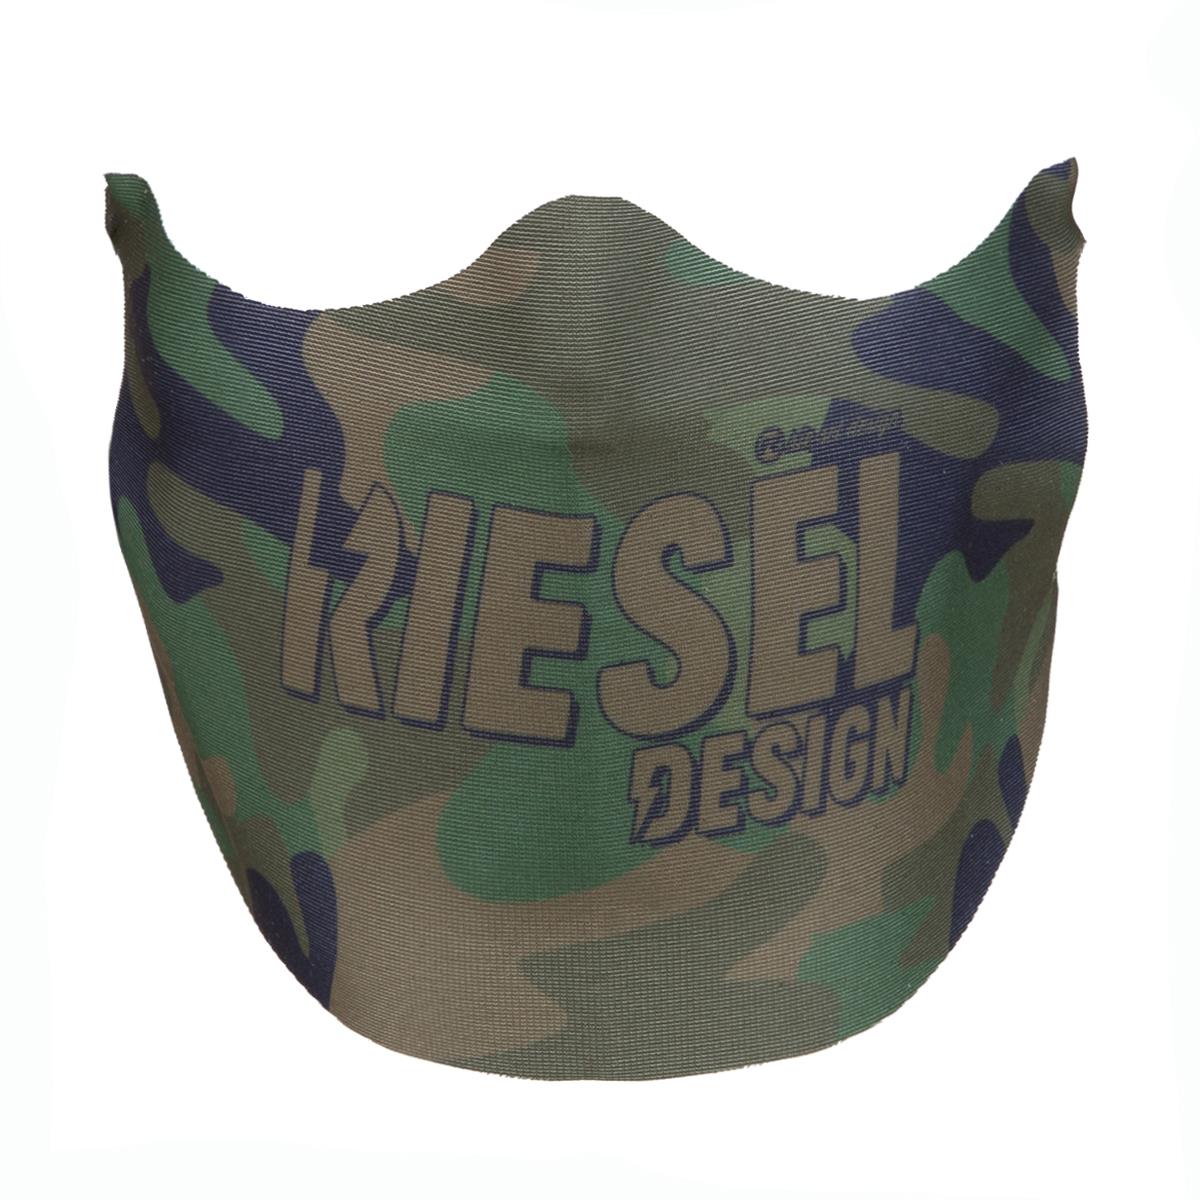 Riesel Design Face Mask  Camo